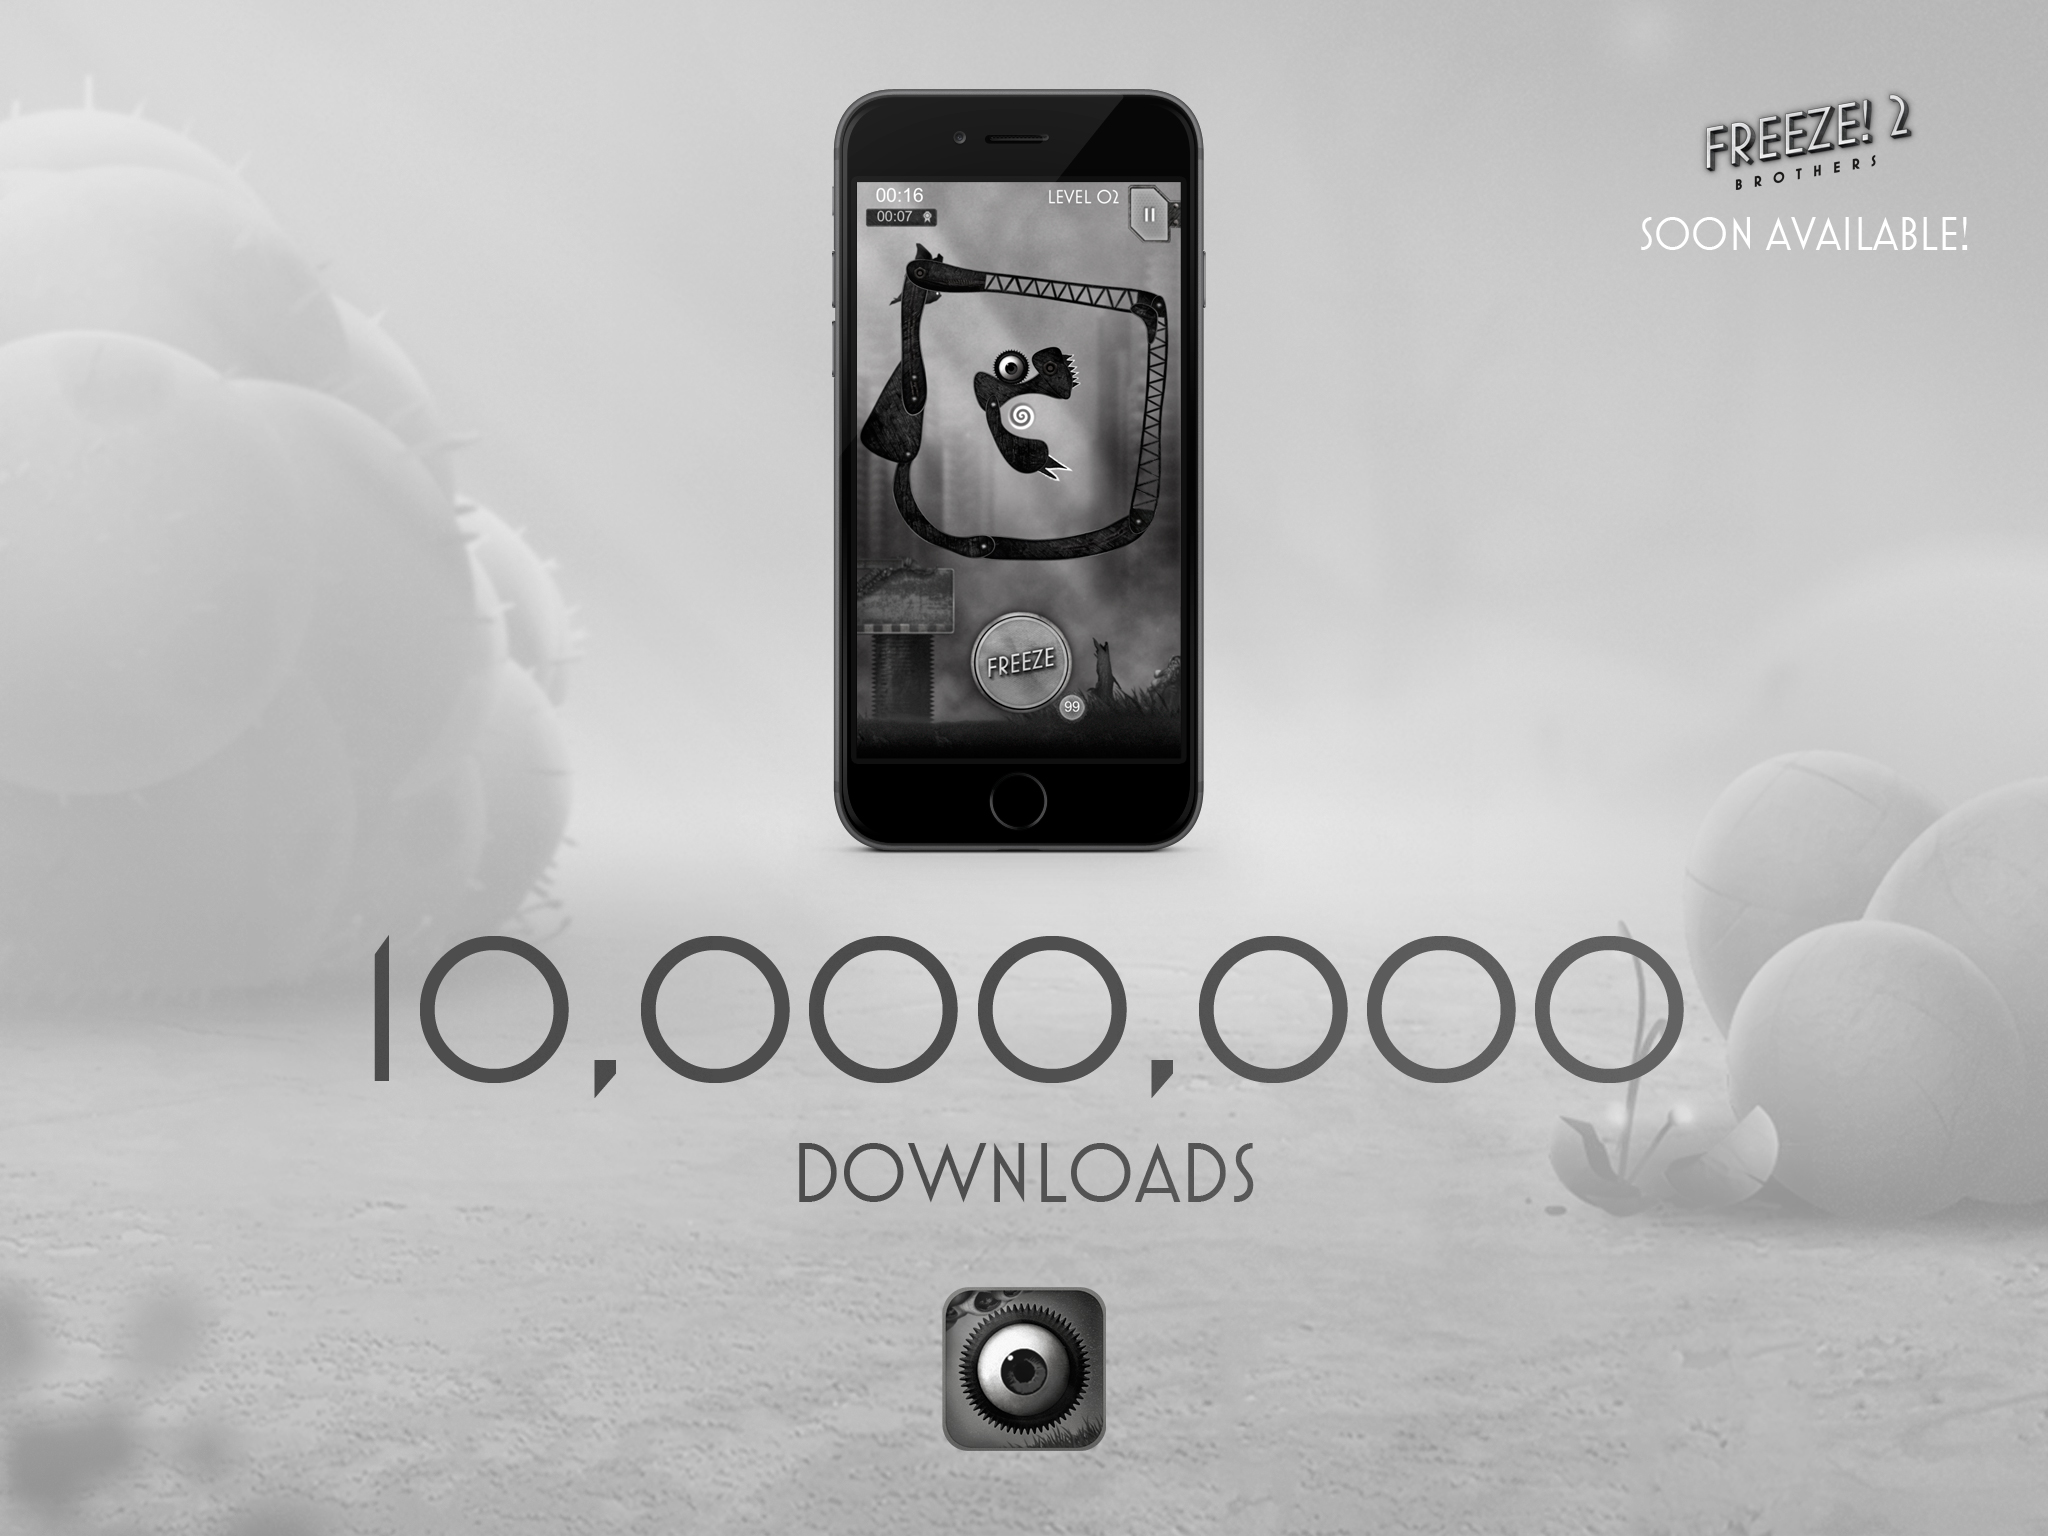 10,000,000 Downloads